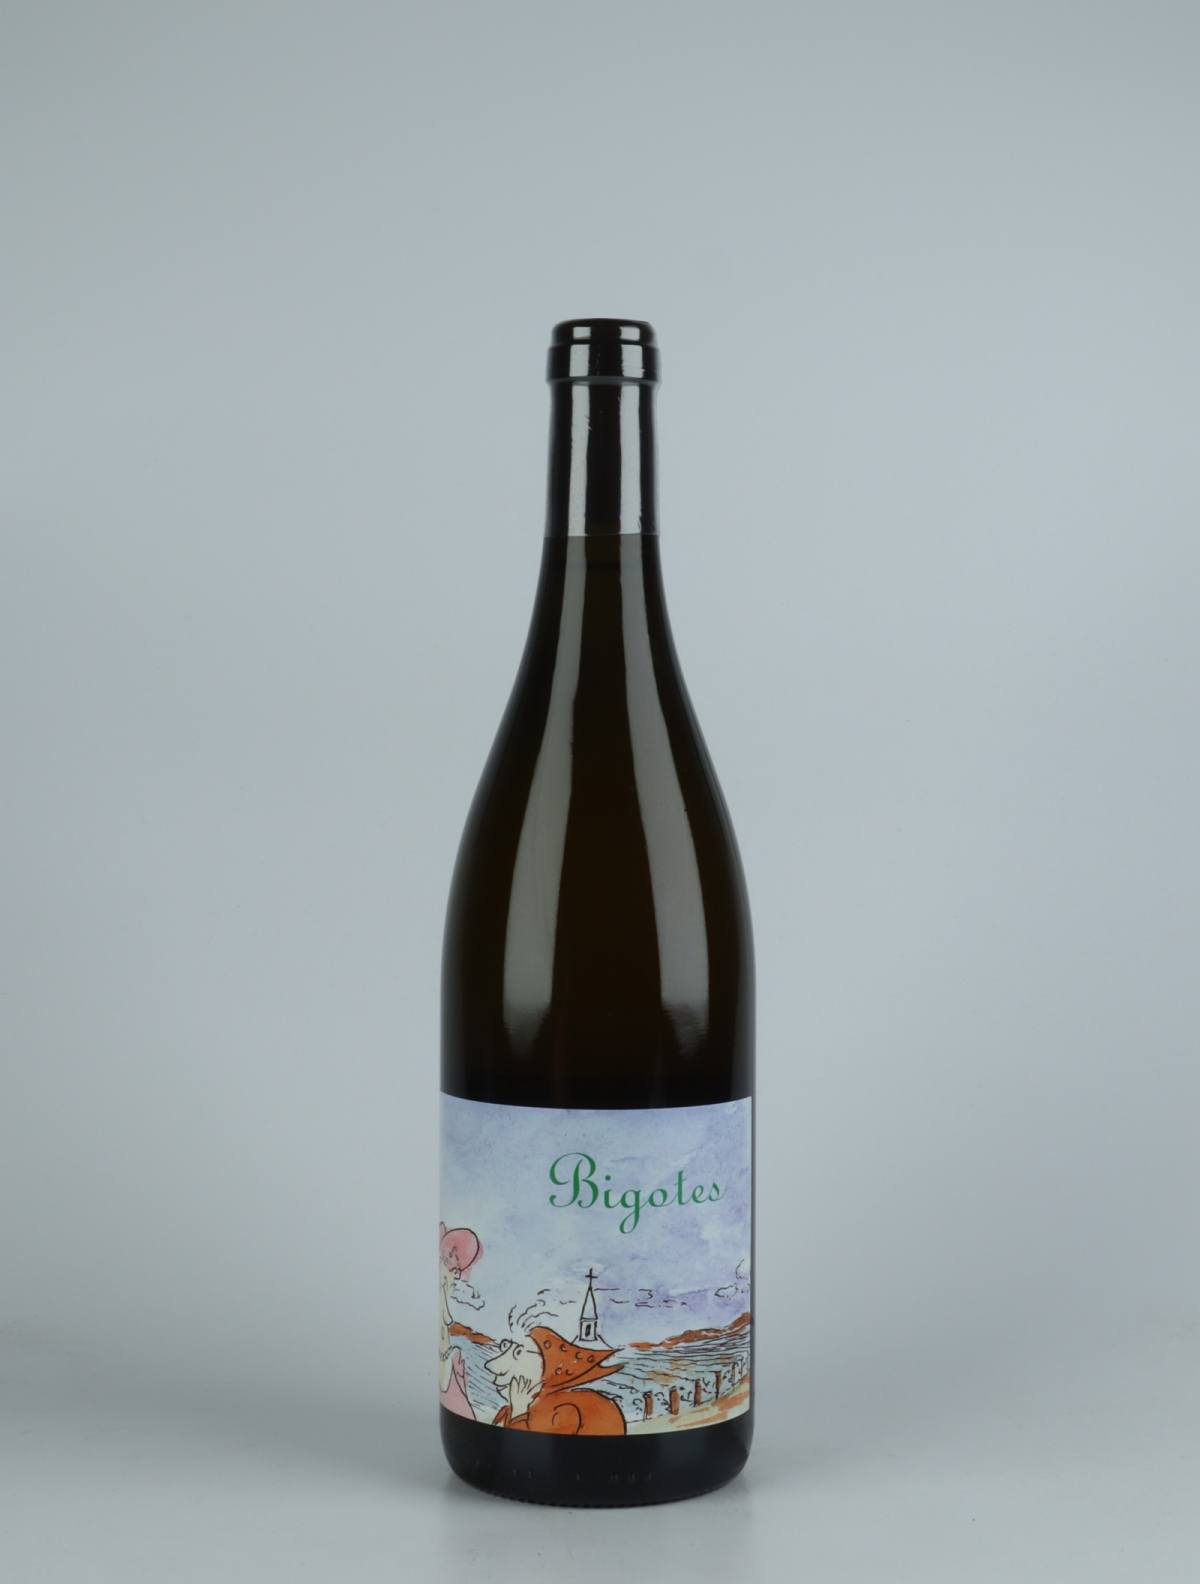 A bottle 2020 Bourgogne Blanc - Bigotes White wine from Frédéric Cossard, Burgundy in France